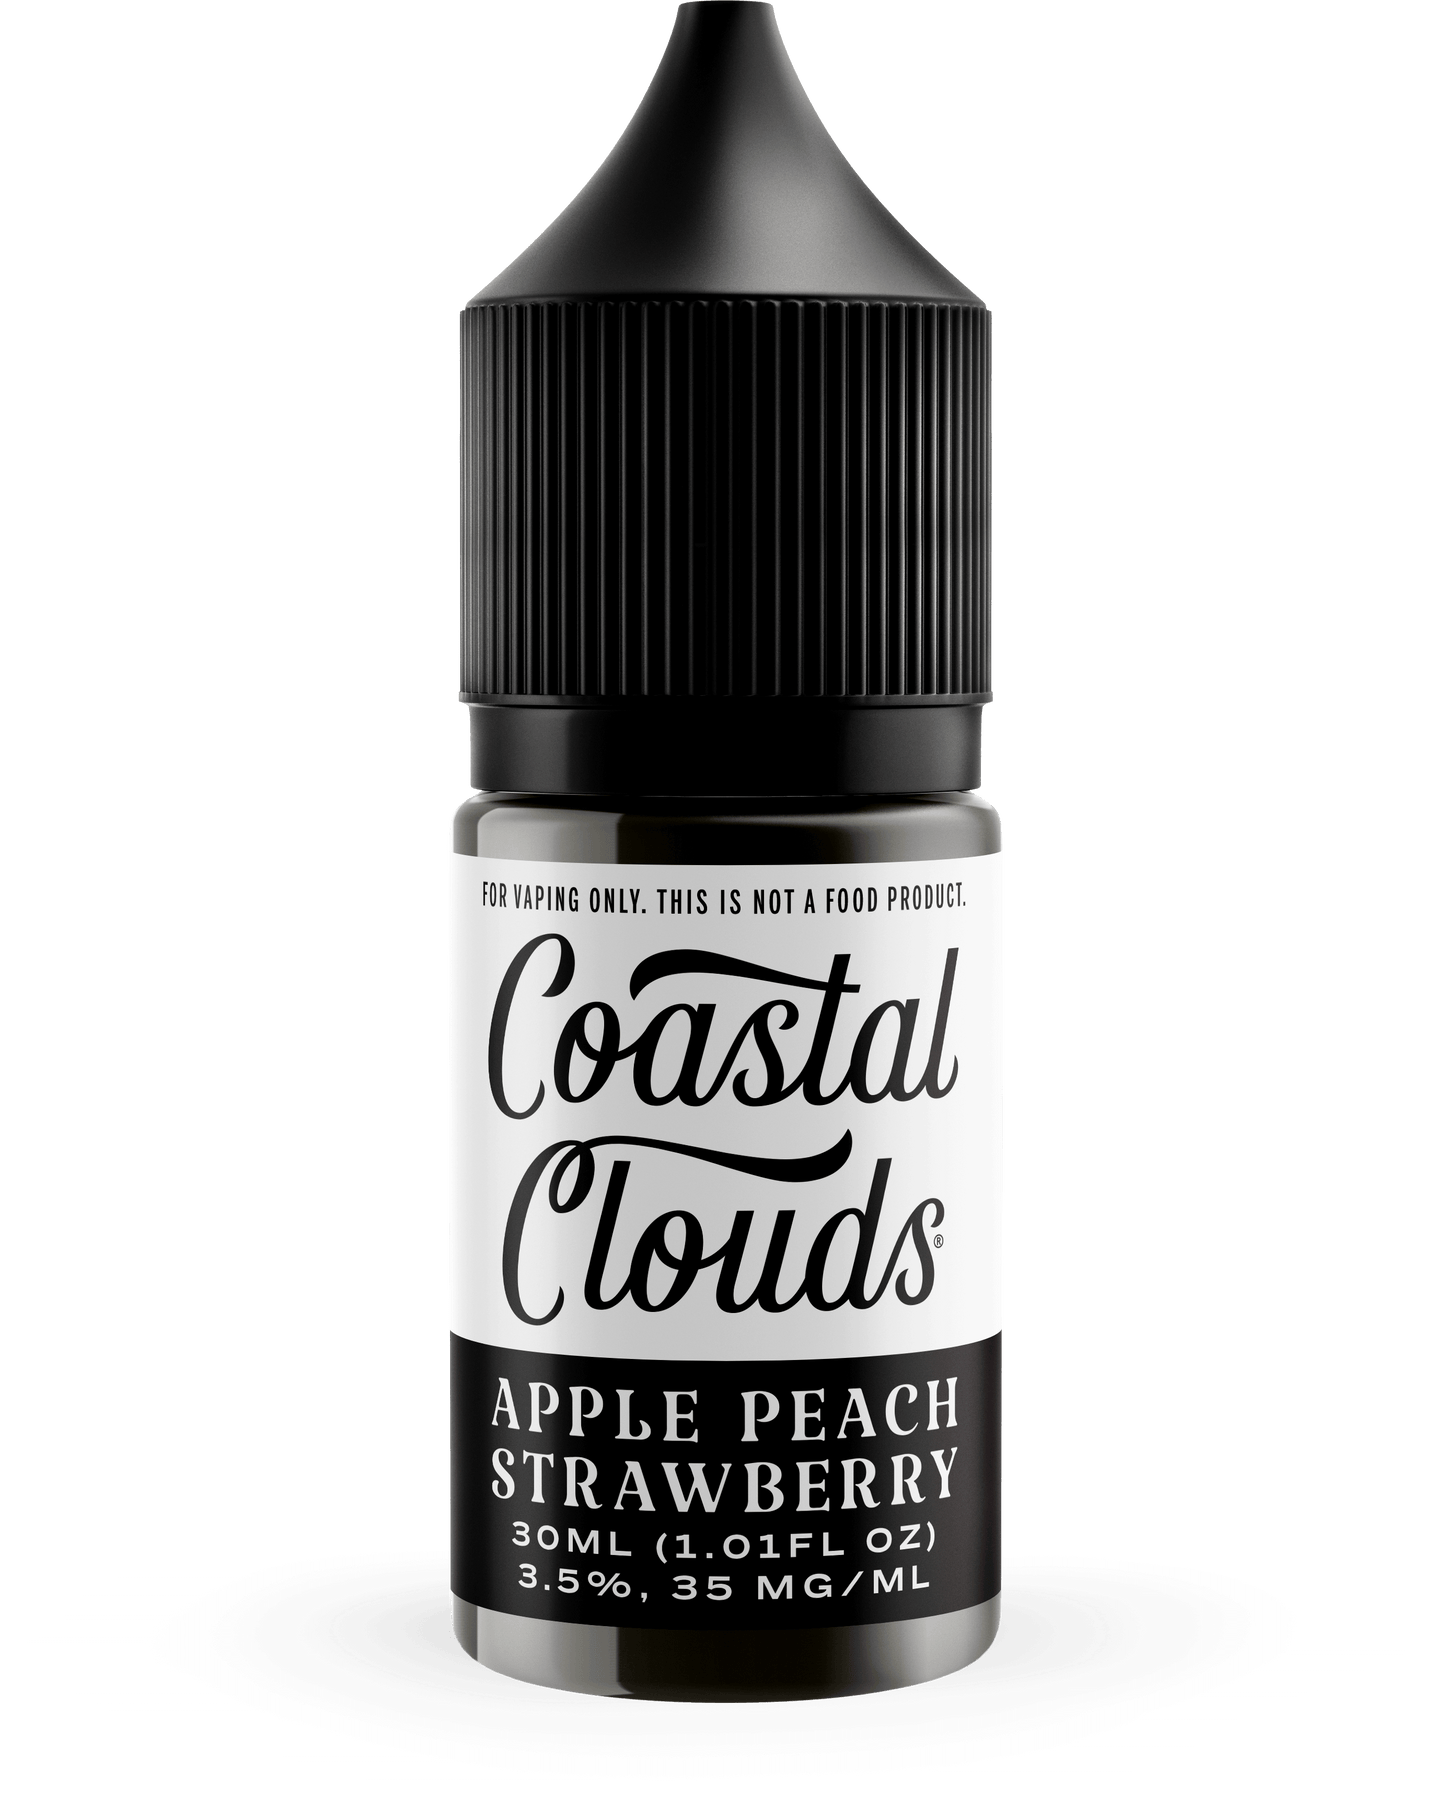 Apple Peach Strawberry by Coastal Clouds Salt Series 30mL bottle